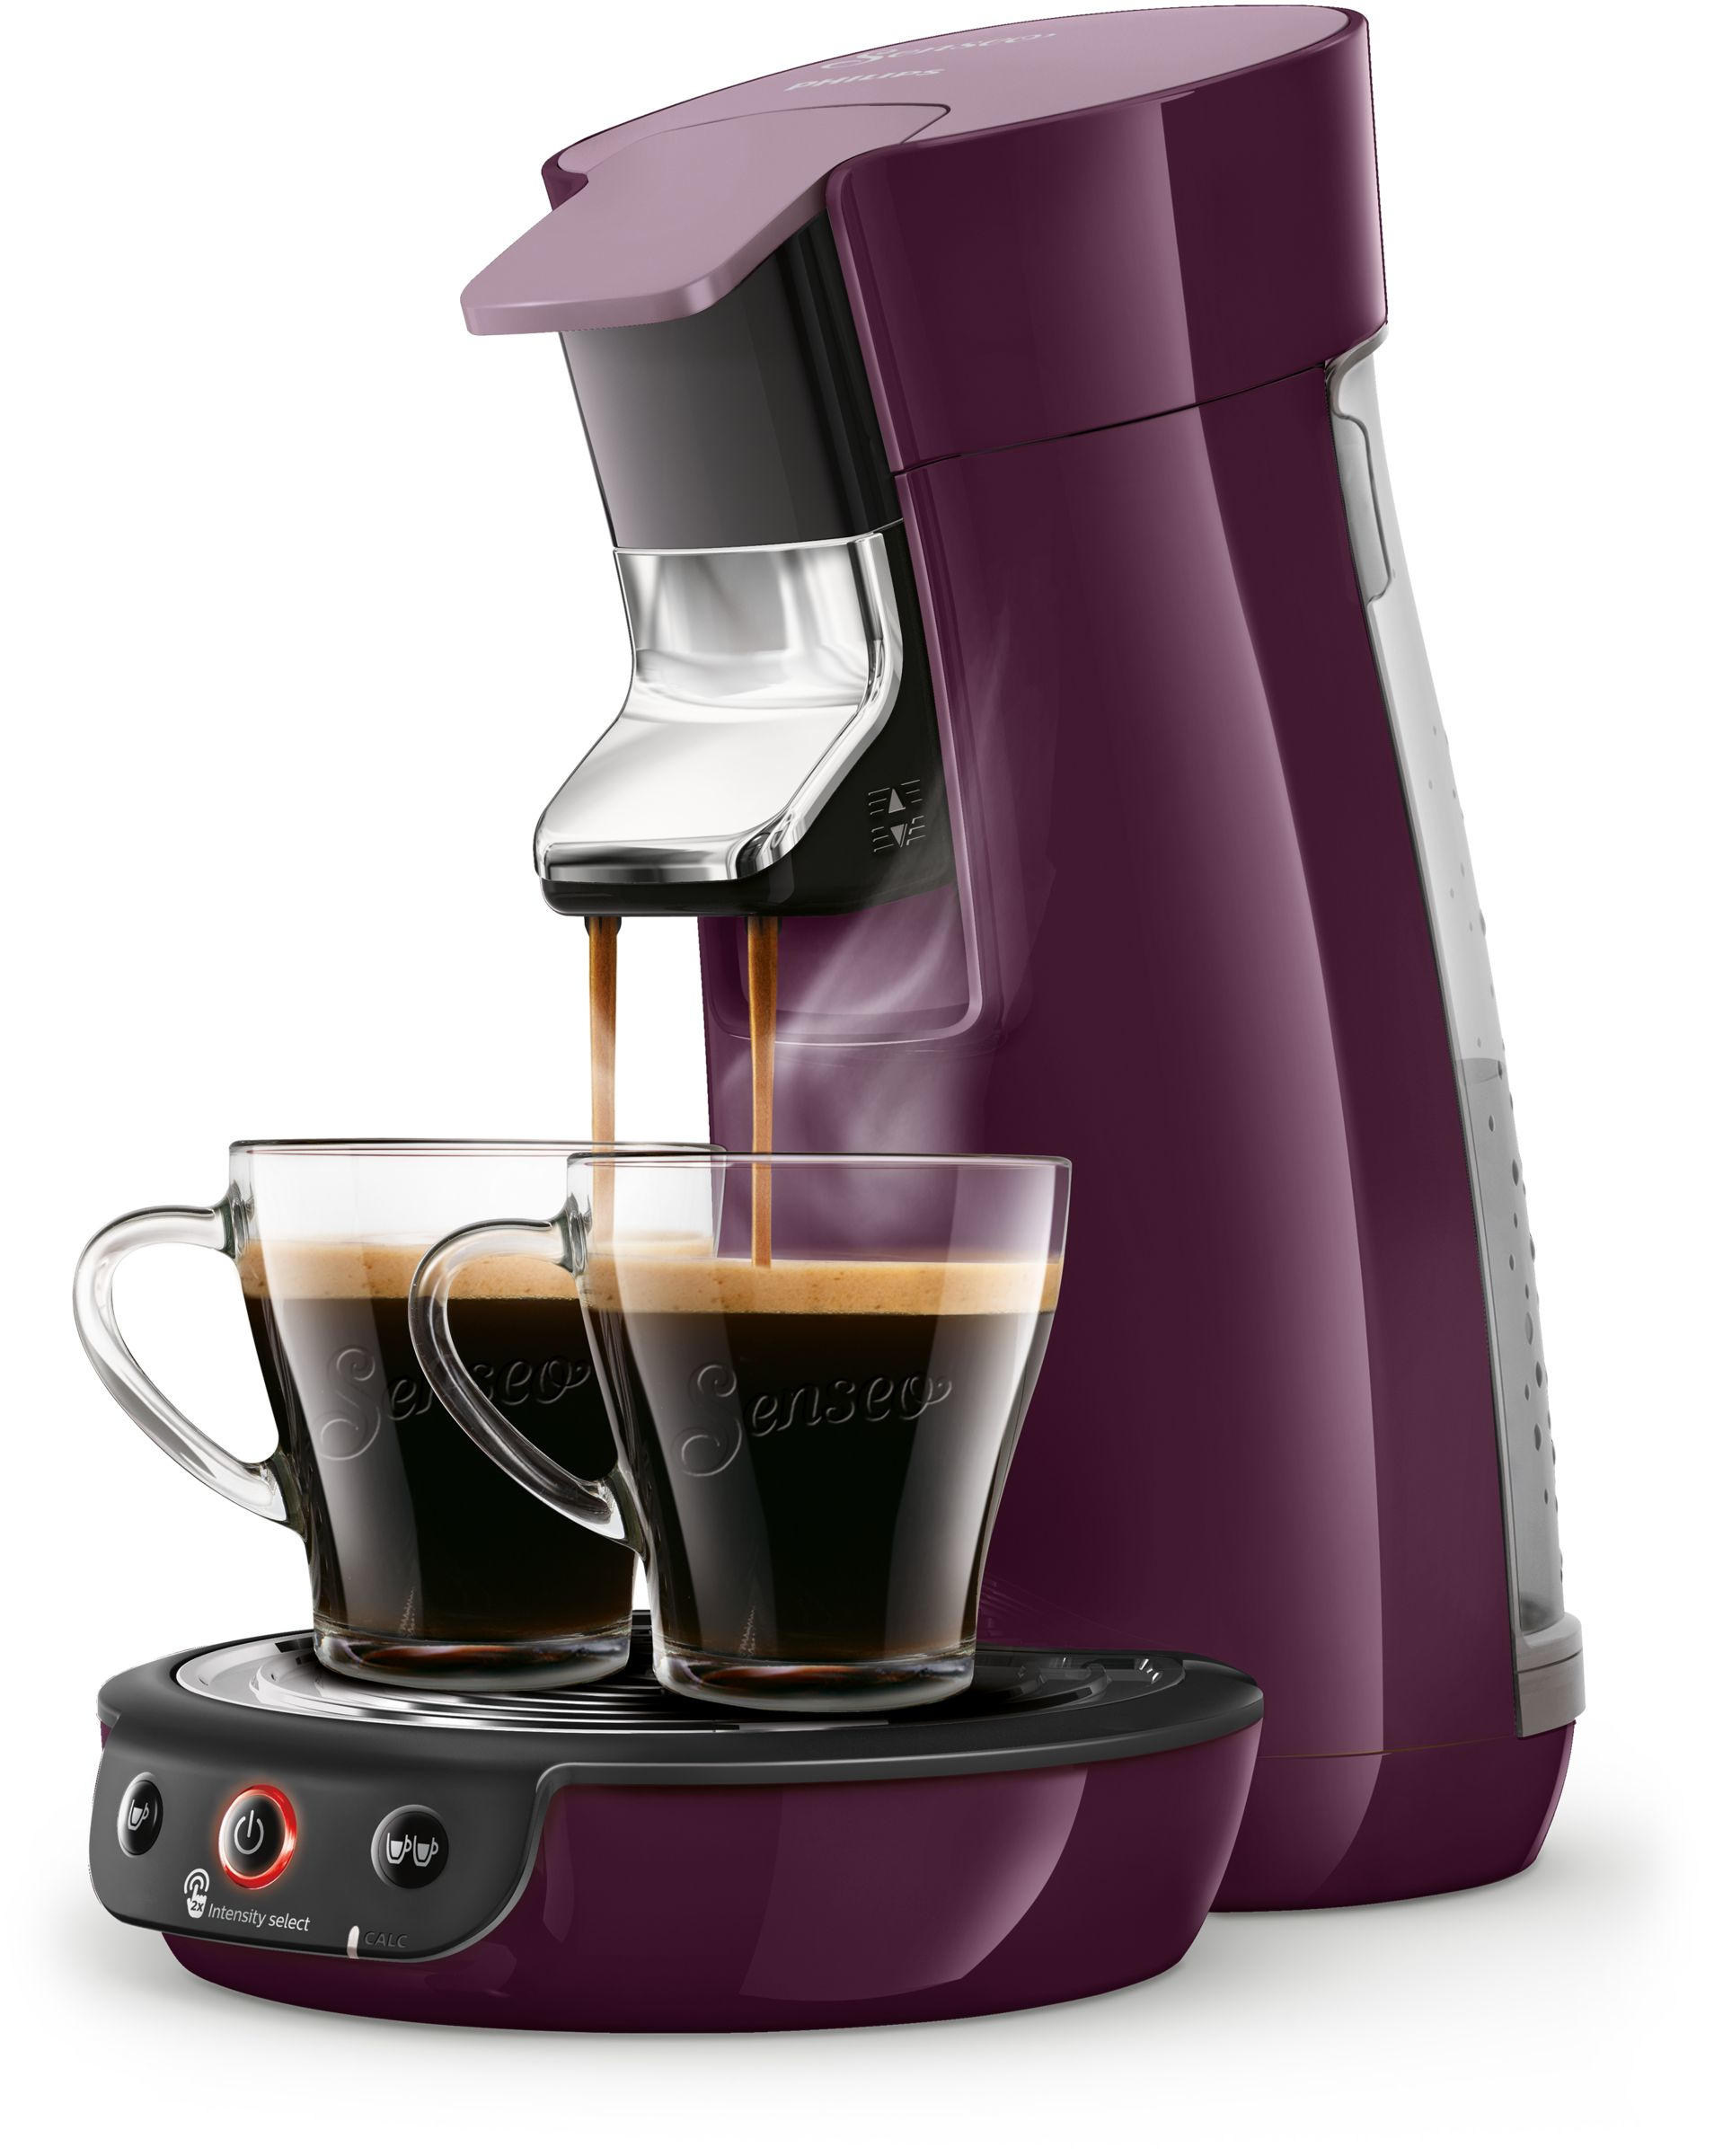 Senseo Viva Café HD6563/92 coffee maker